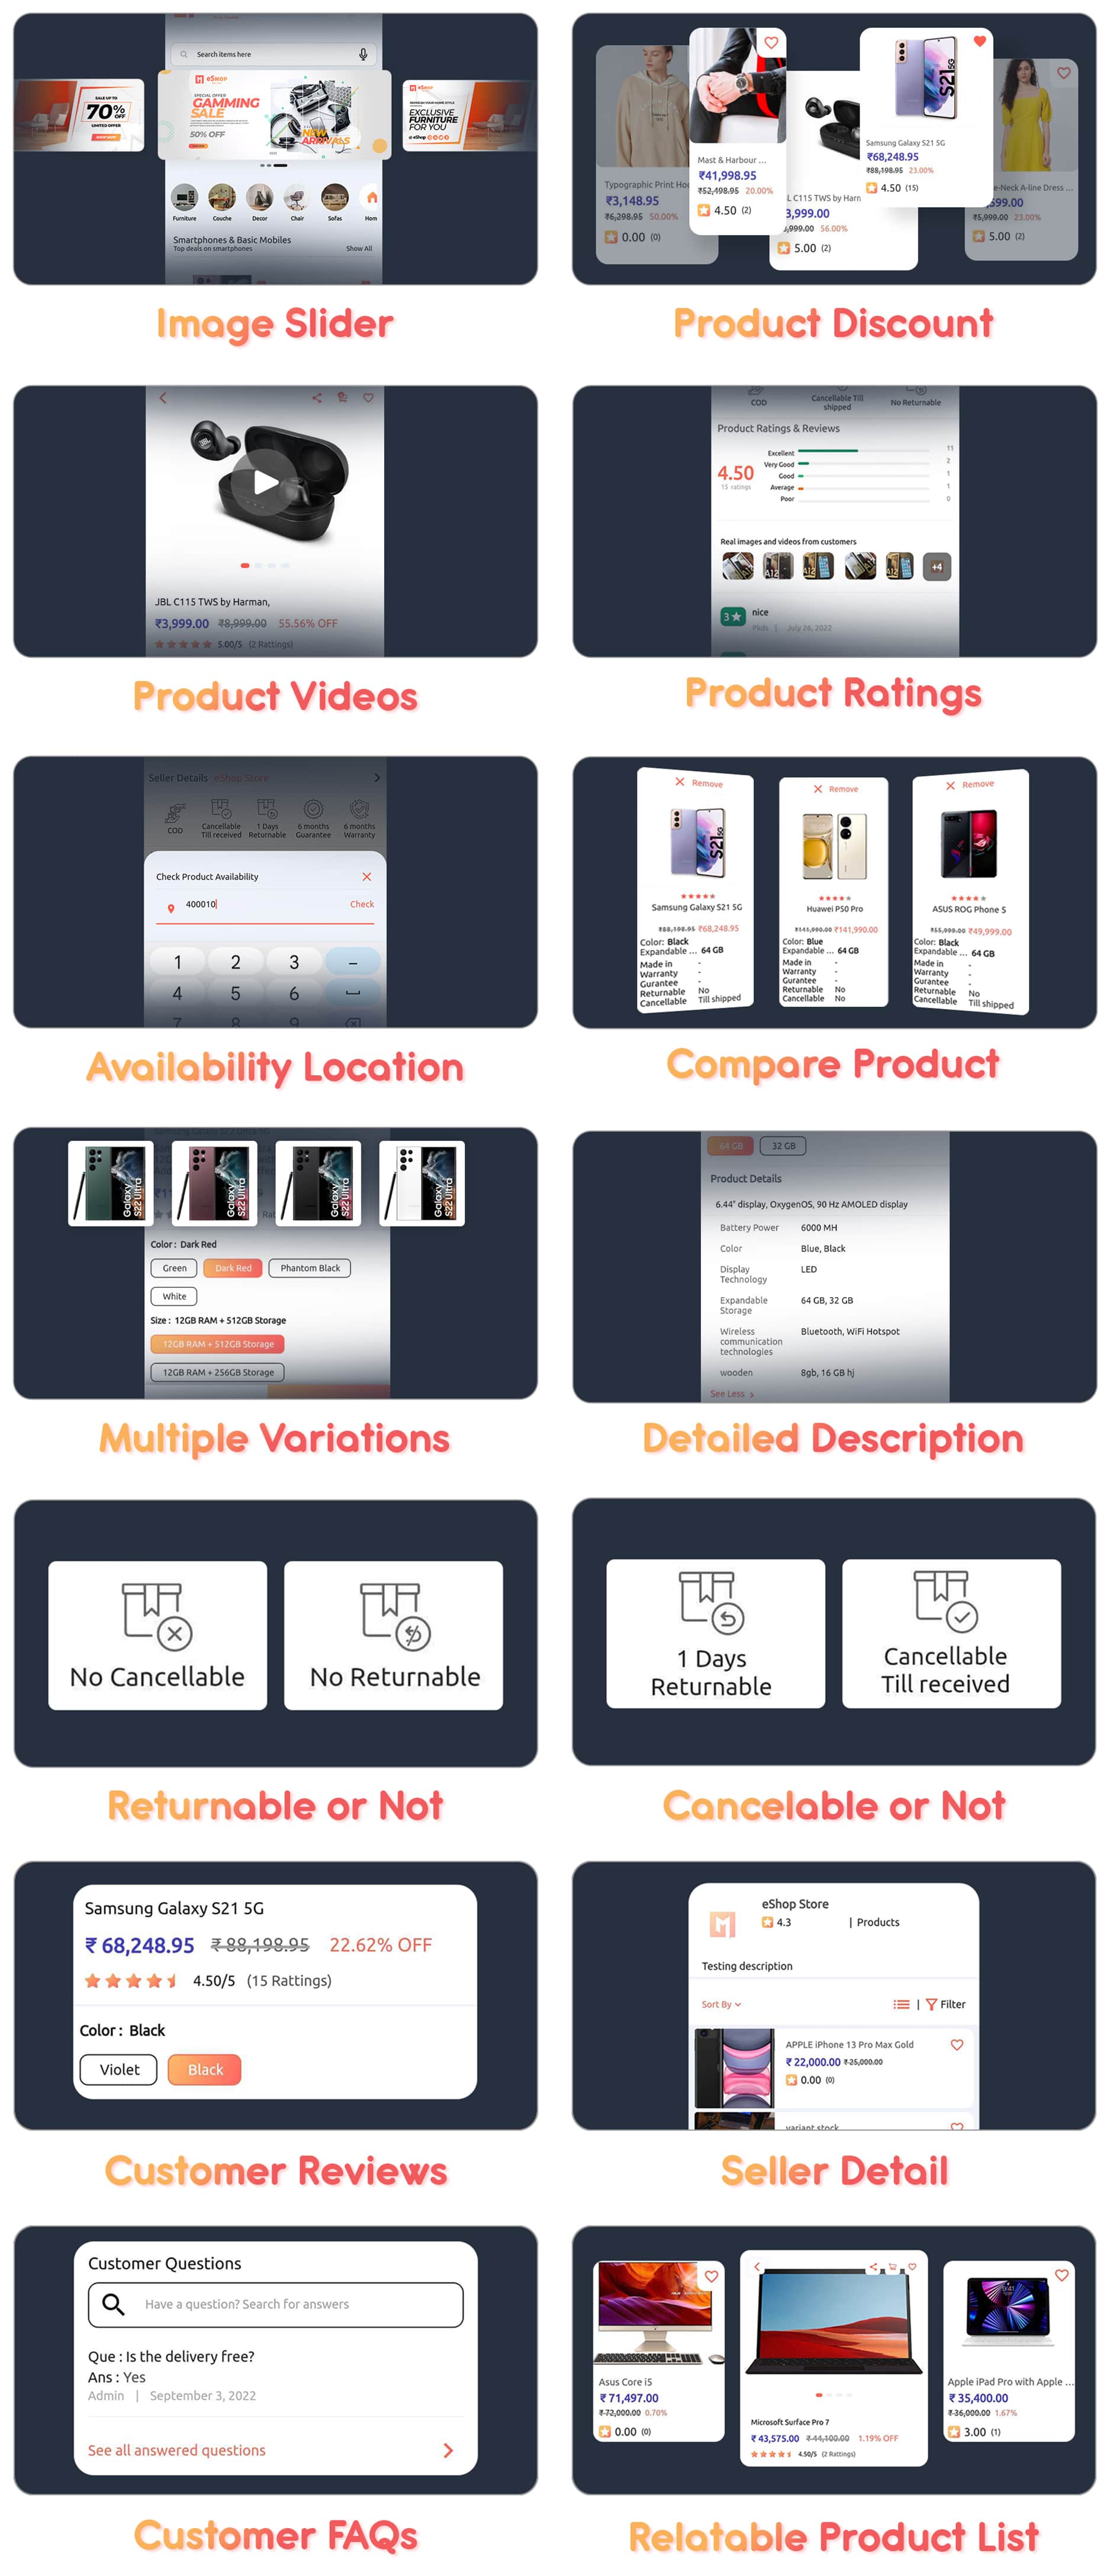 eShop - Multi Vendor eCommerce App & eCommerce Vendor Marketplace Flutter App - 19